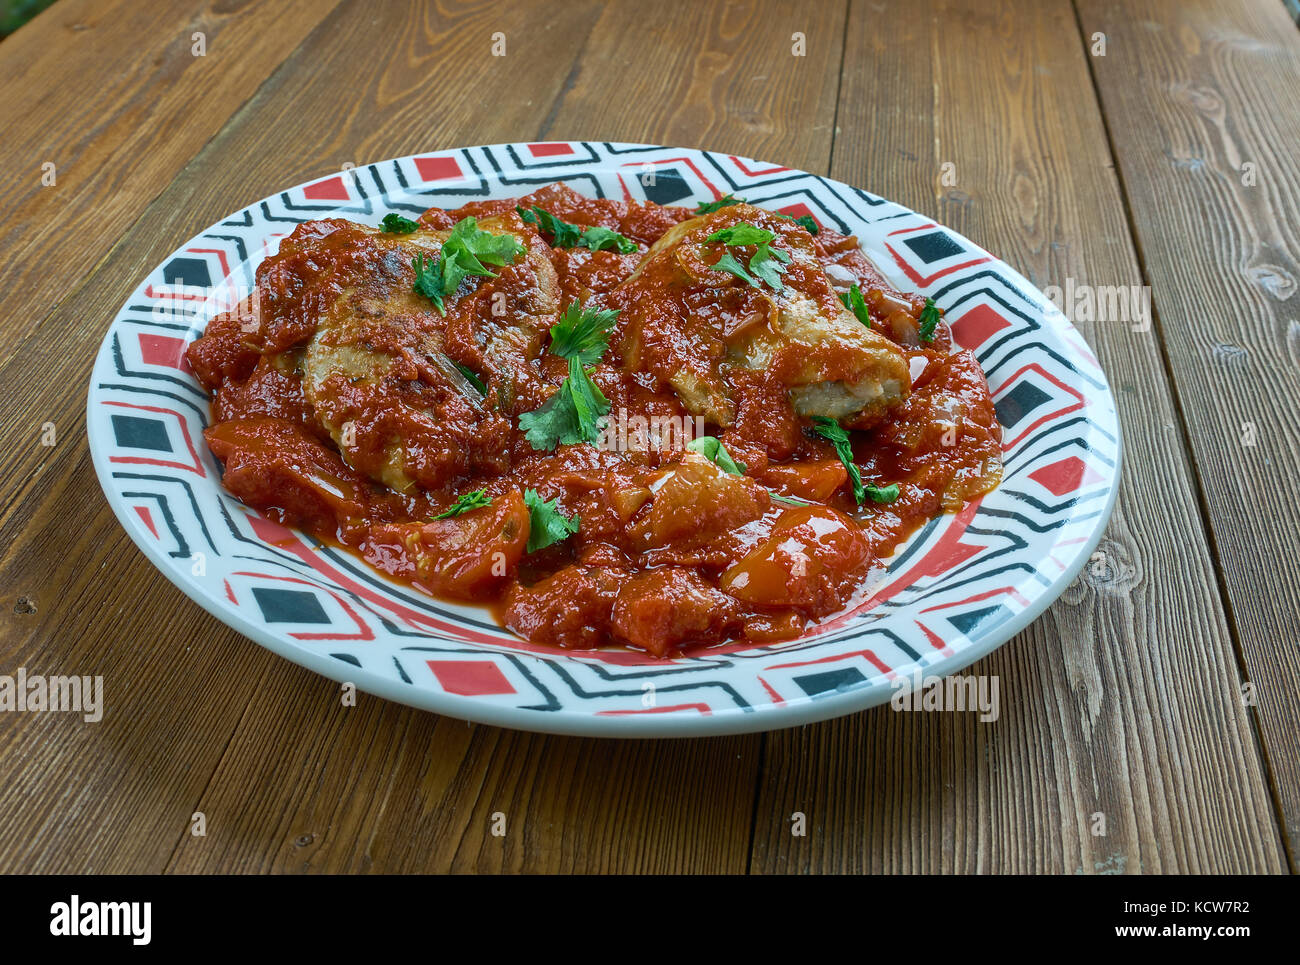 https://c8.alamy.com/comp/KCW7R2/lahori-red-chicken-karahi-indian-food-close-up-KCW7R2.jpg